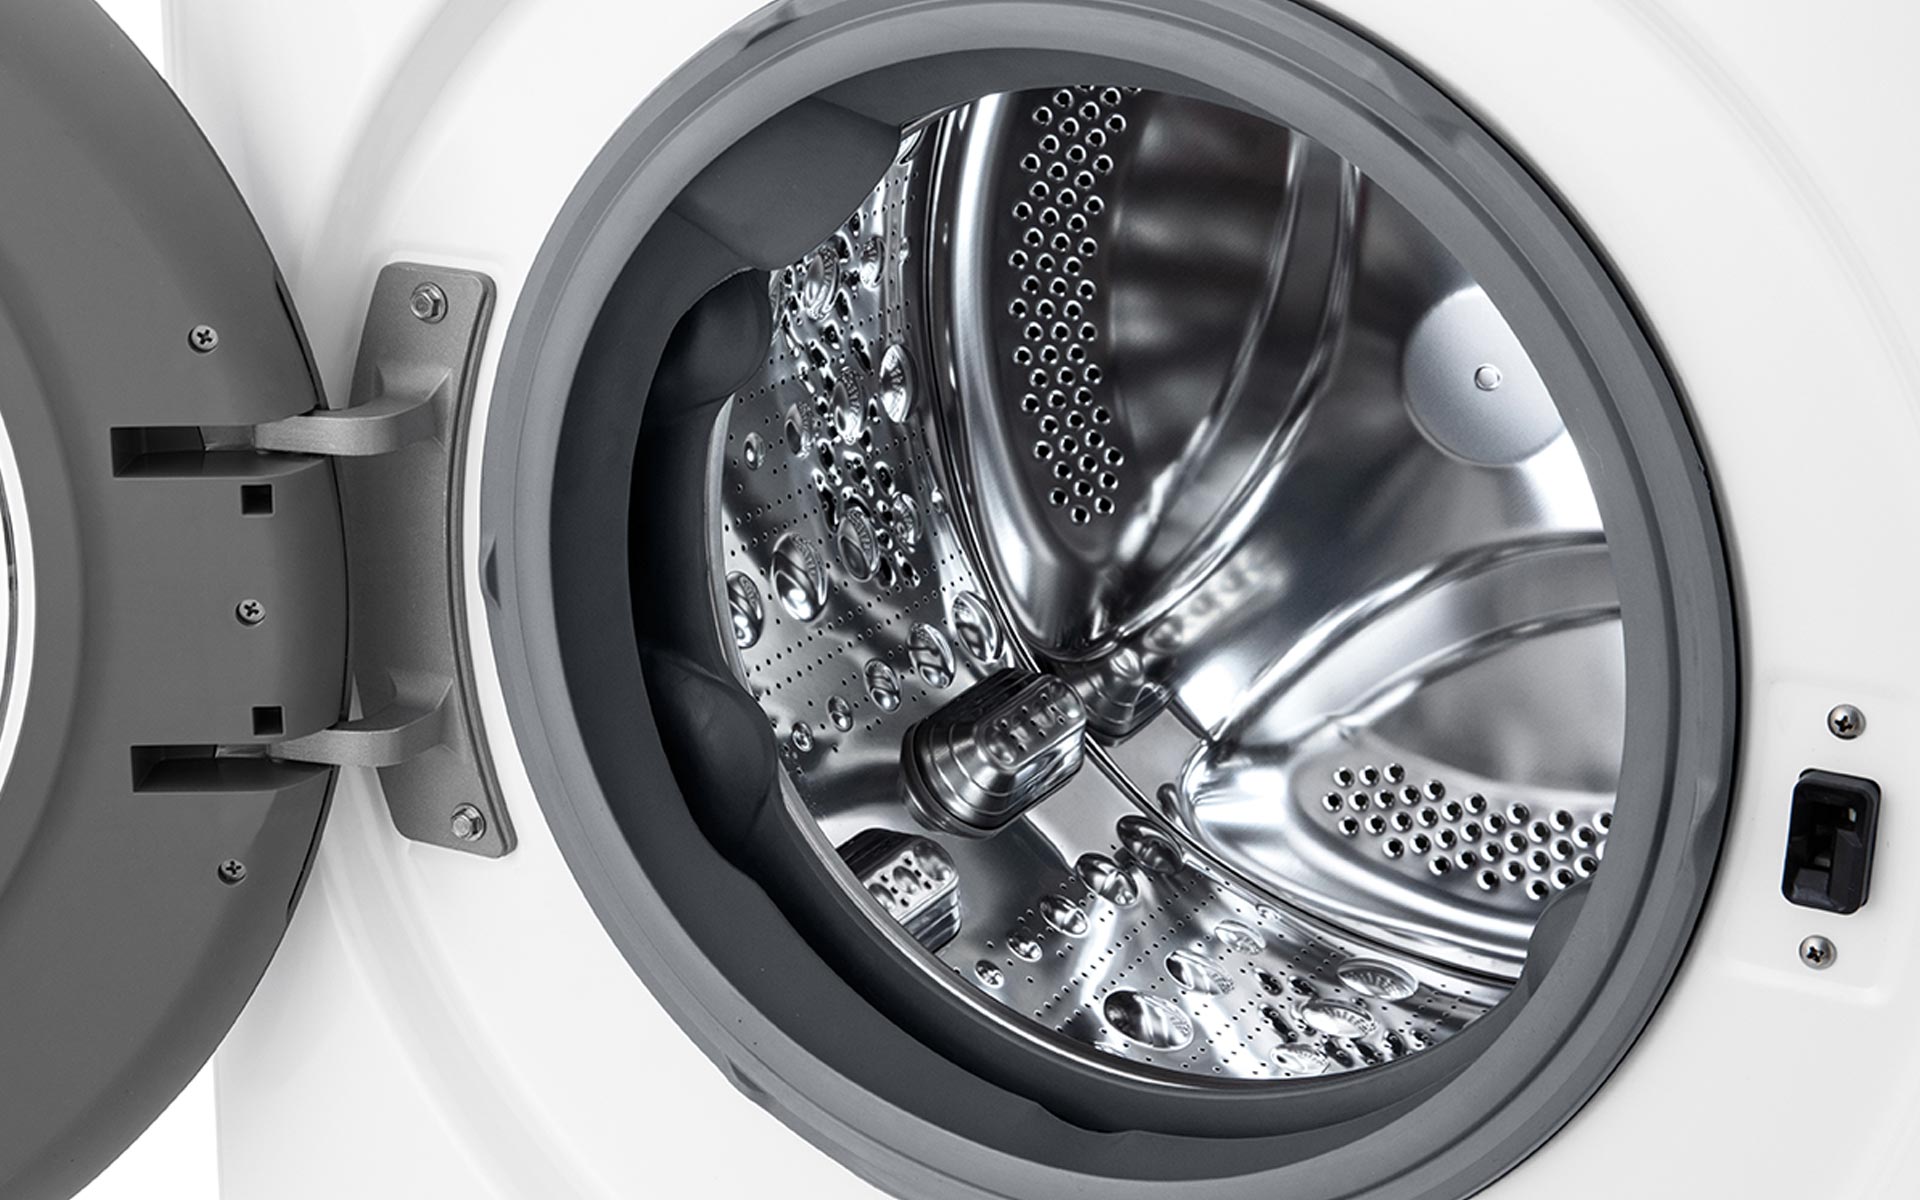 Interior drum of an LG Washing Machine